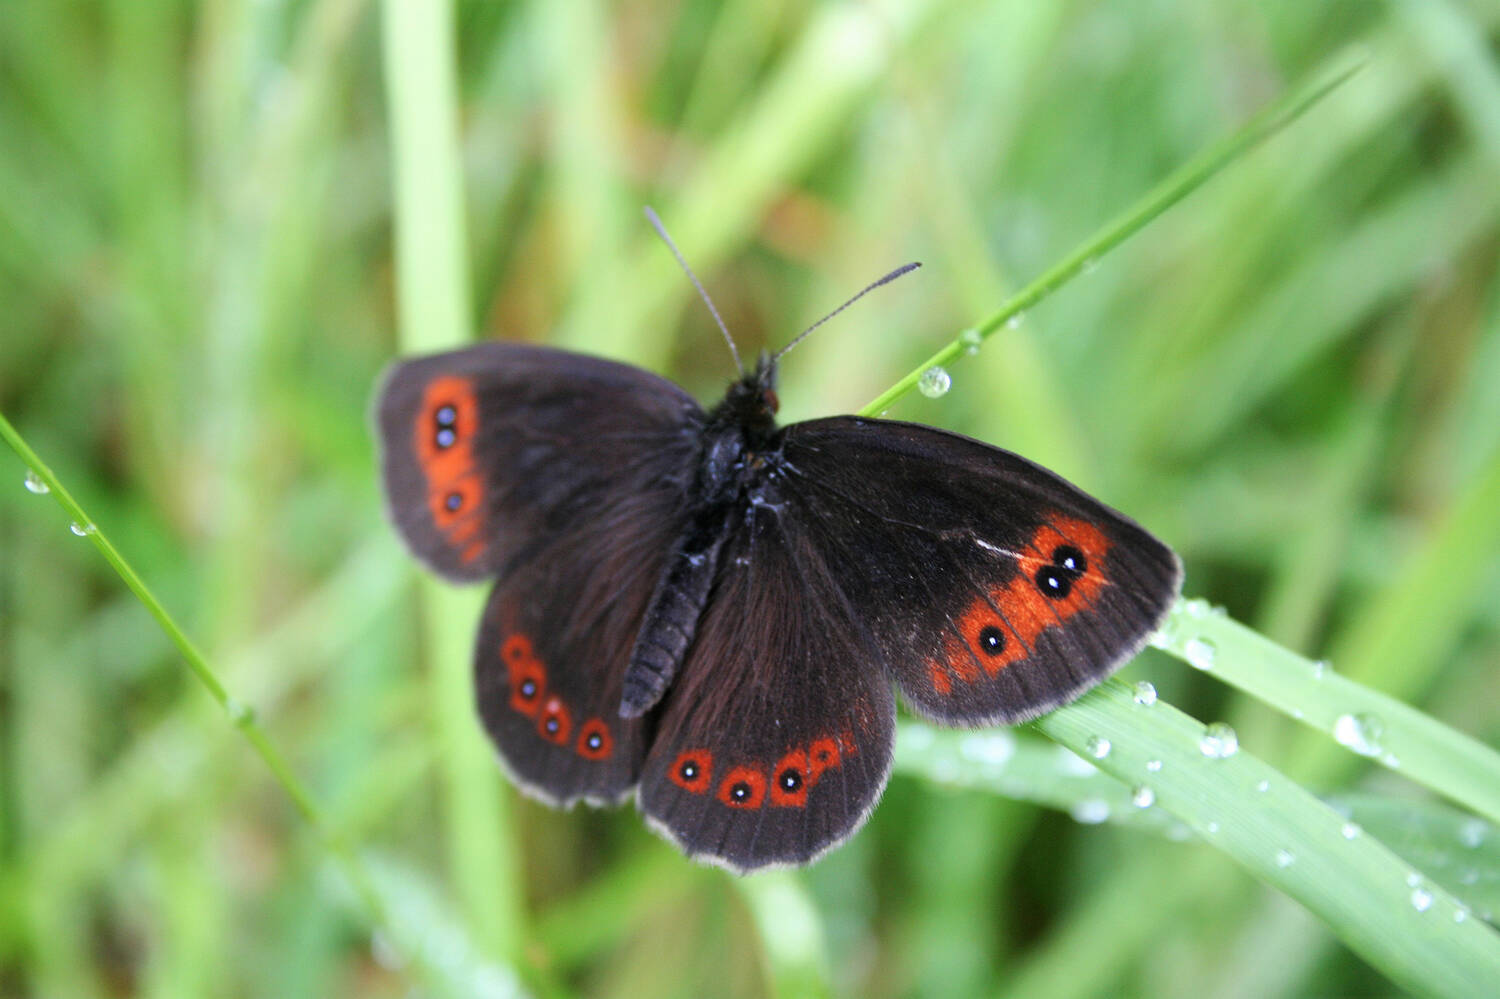 Scotch argus butterfly on a blade of grass